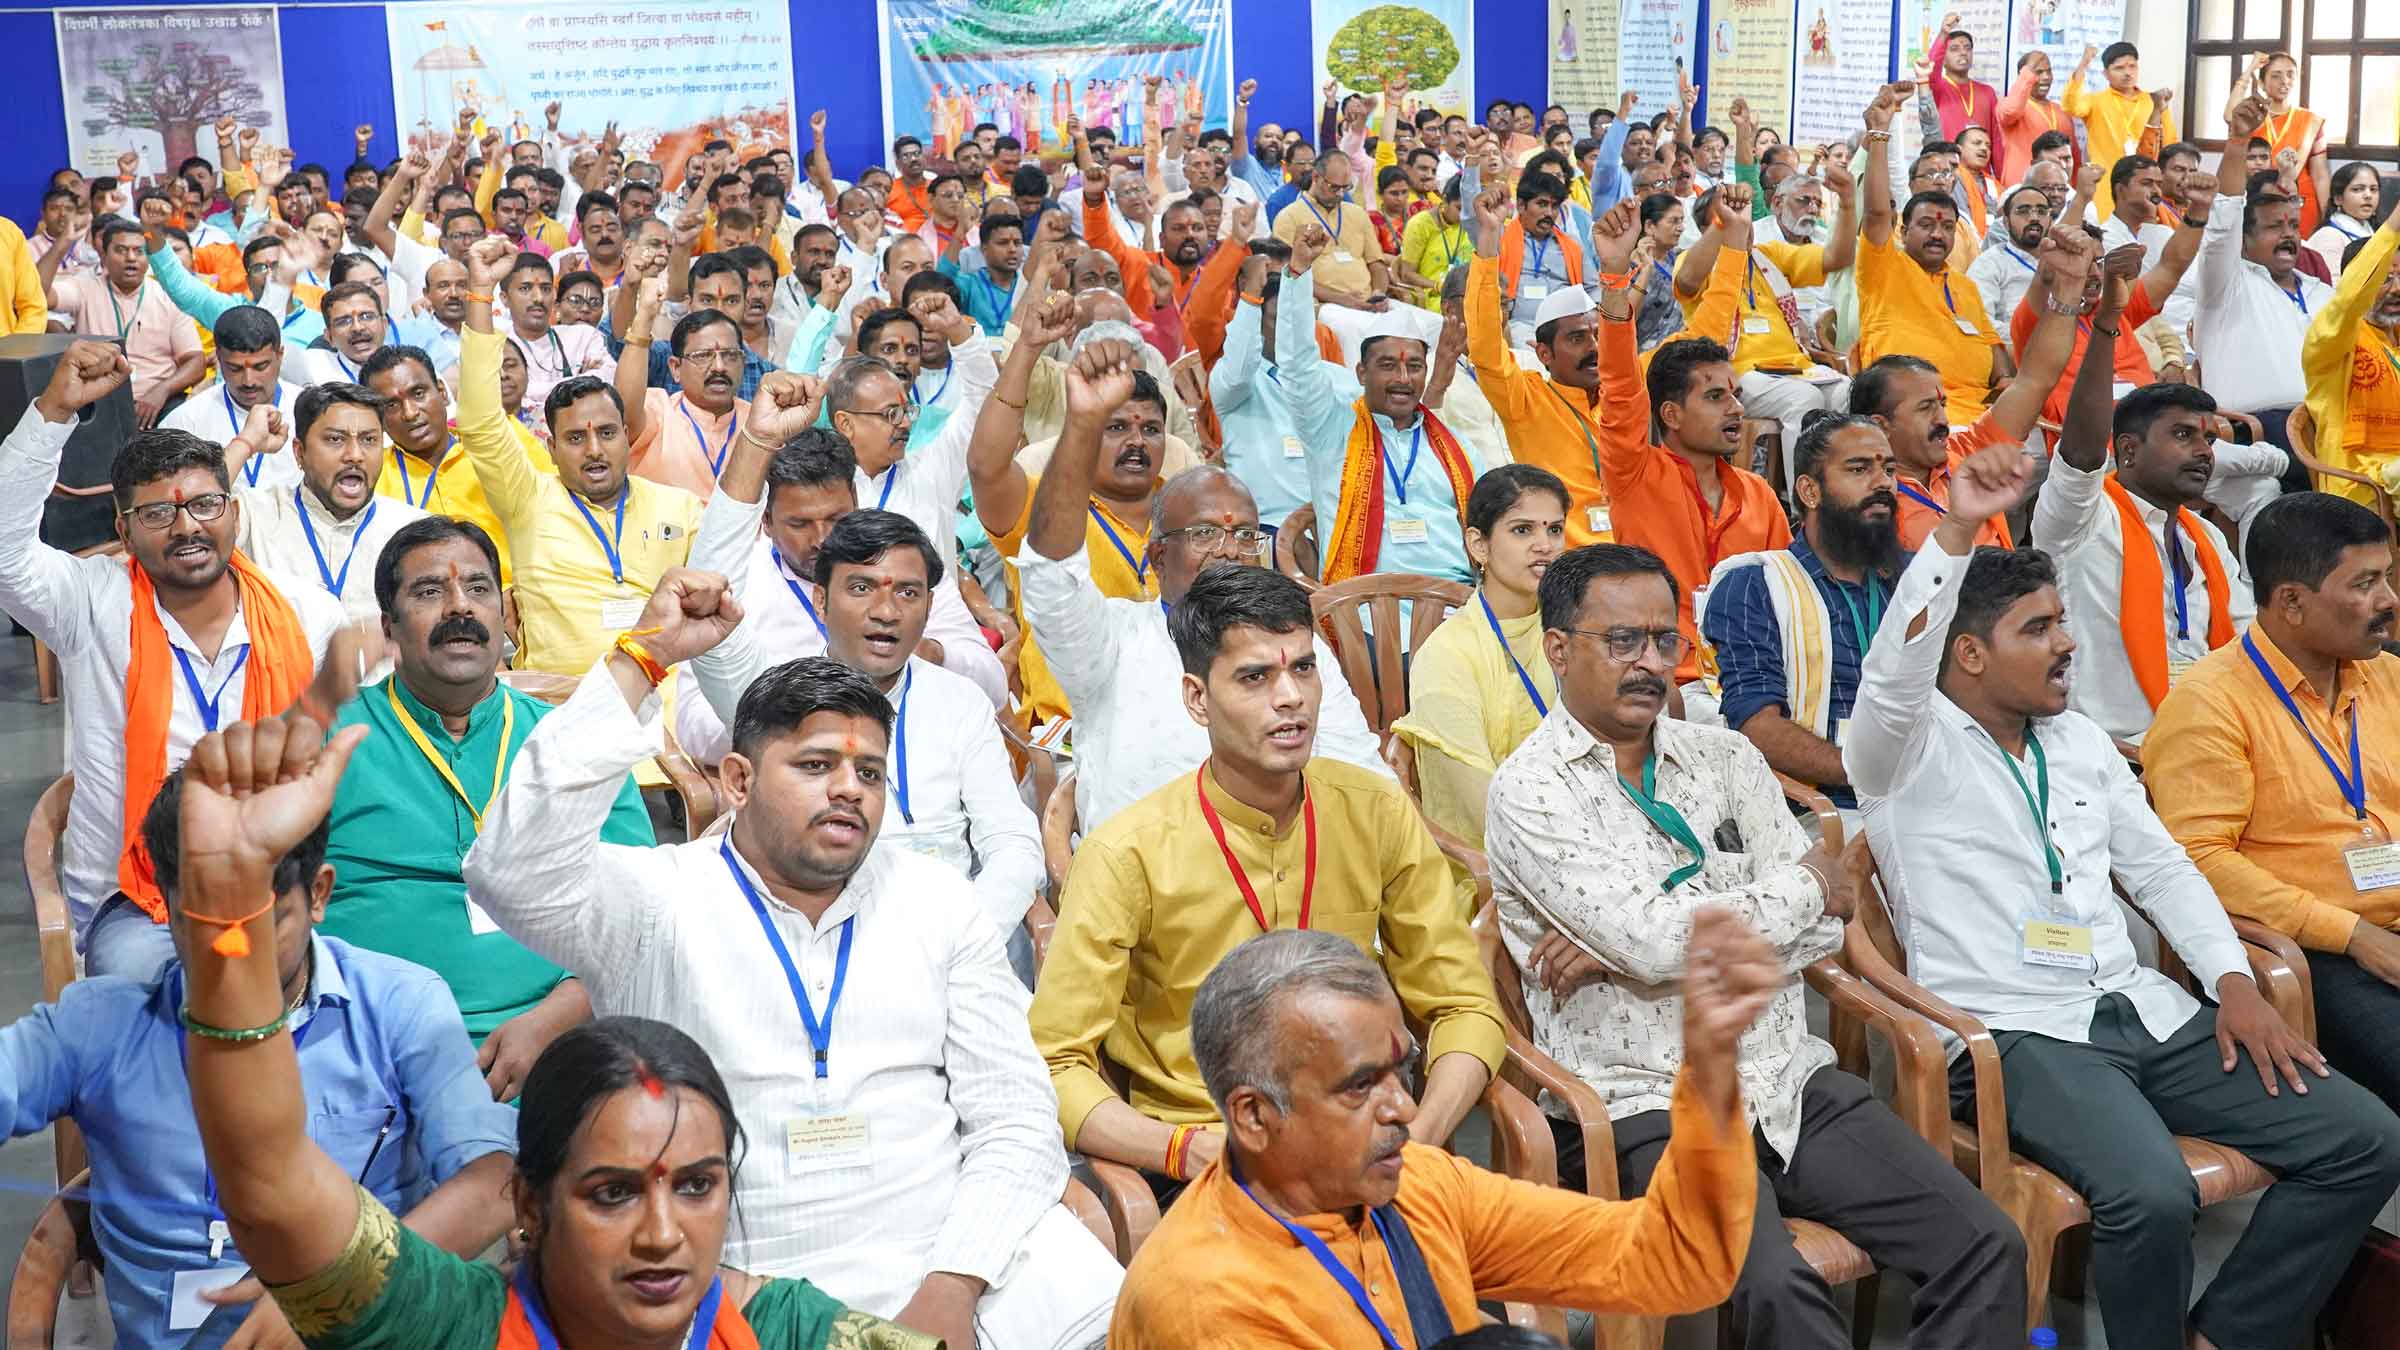 Devout Hindus spreading enthusiasm in the whole environment with the chants of ‘Jayatu Jayatu Hindurashtram’